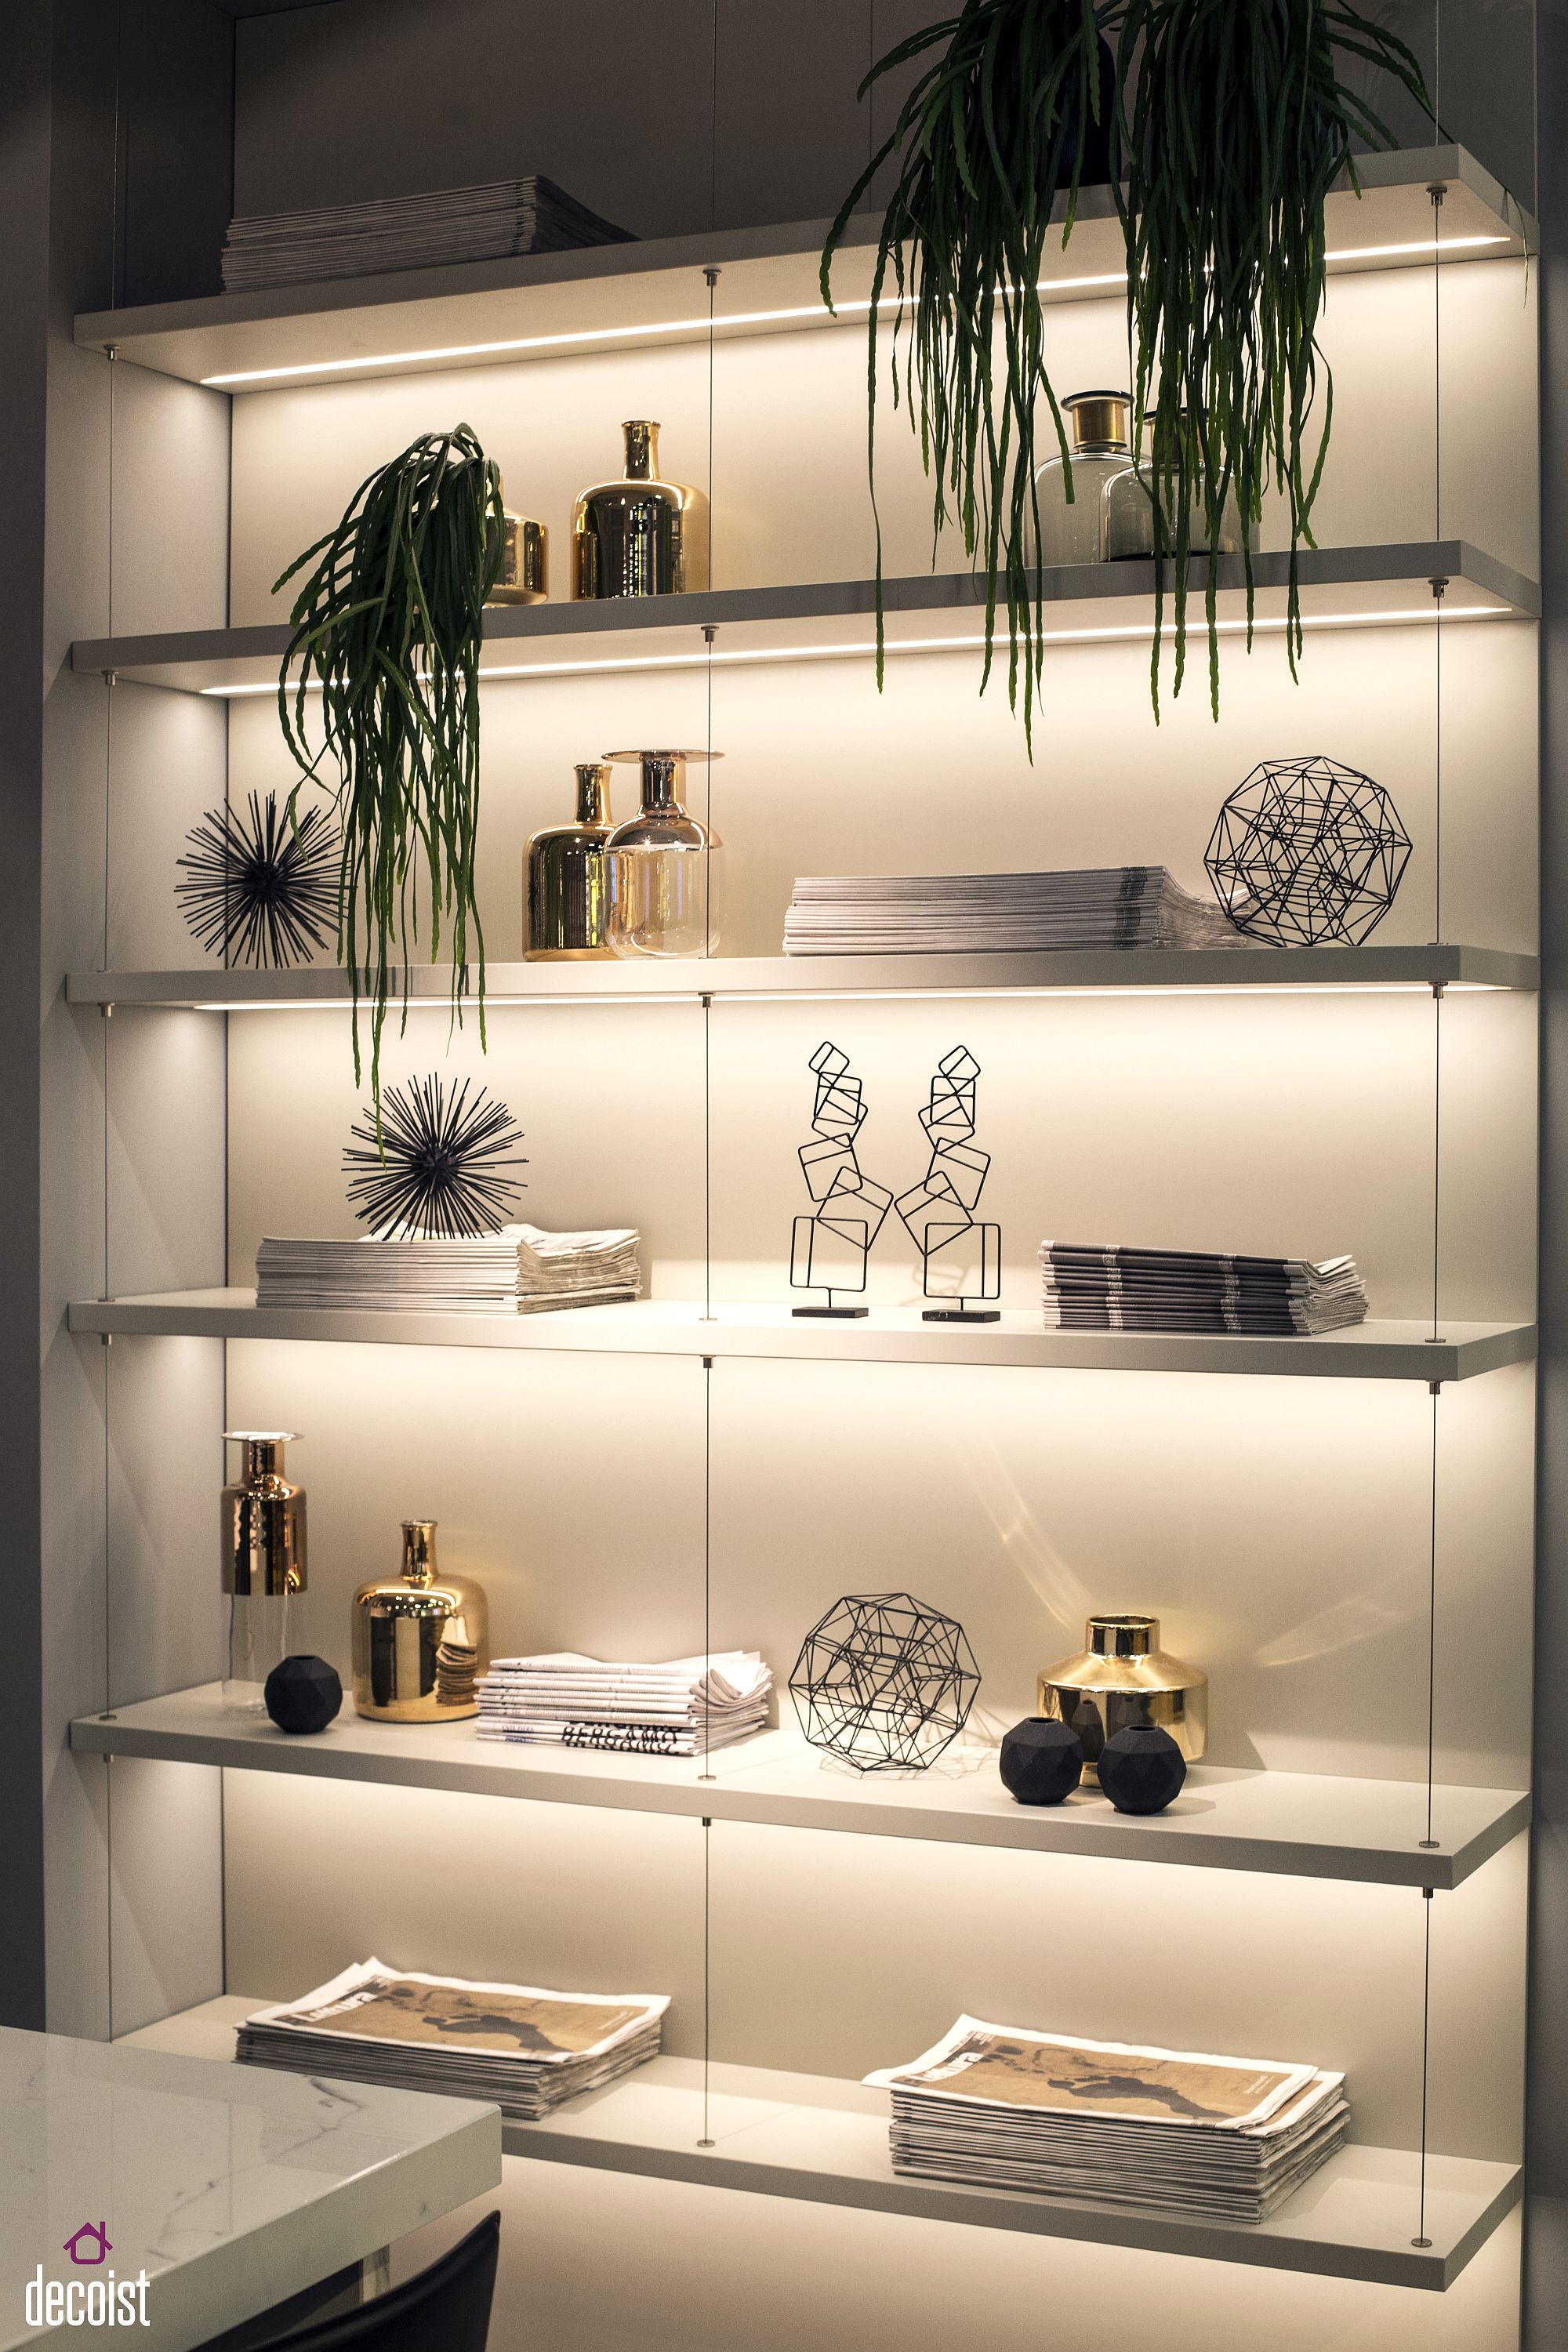 LED-strip-lights-make-for-great-accent-lighting-to-highlight-kitchen-shelves